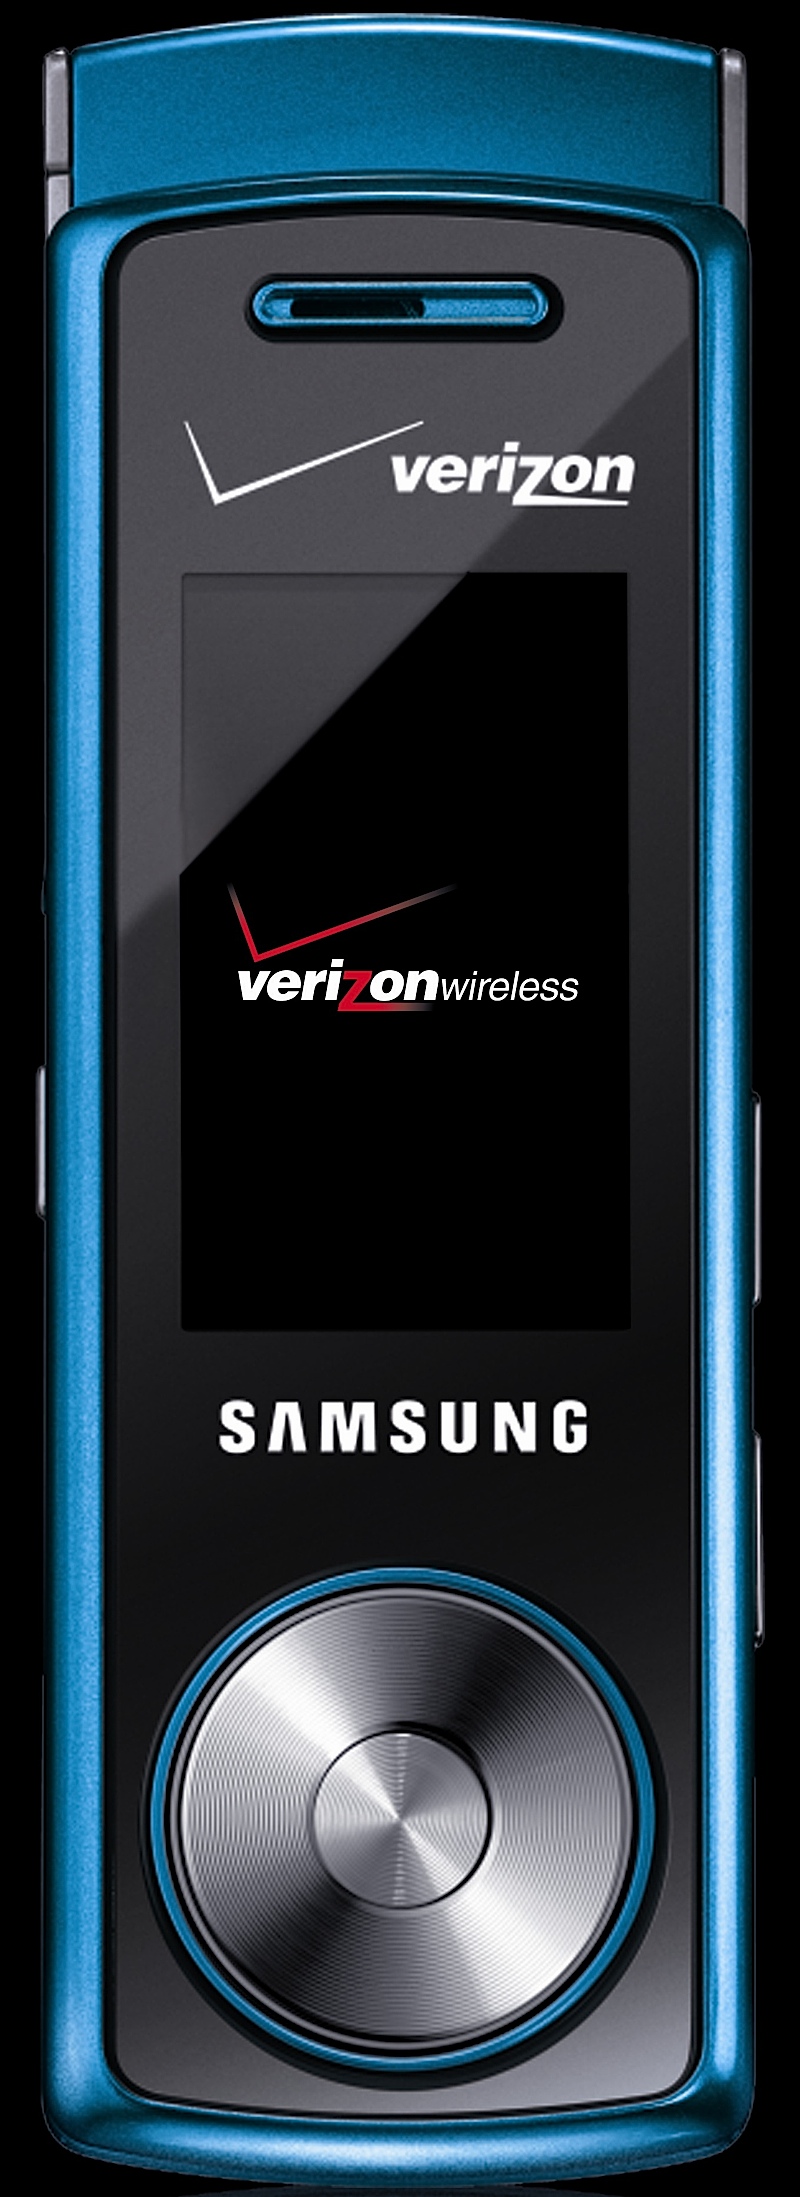 Touch Screen Phones Verizon Verizon phone